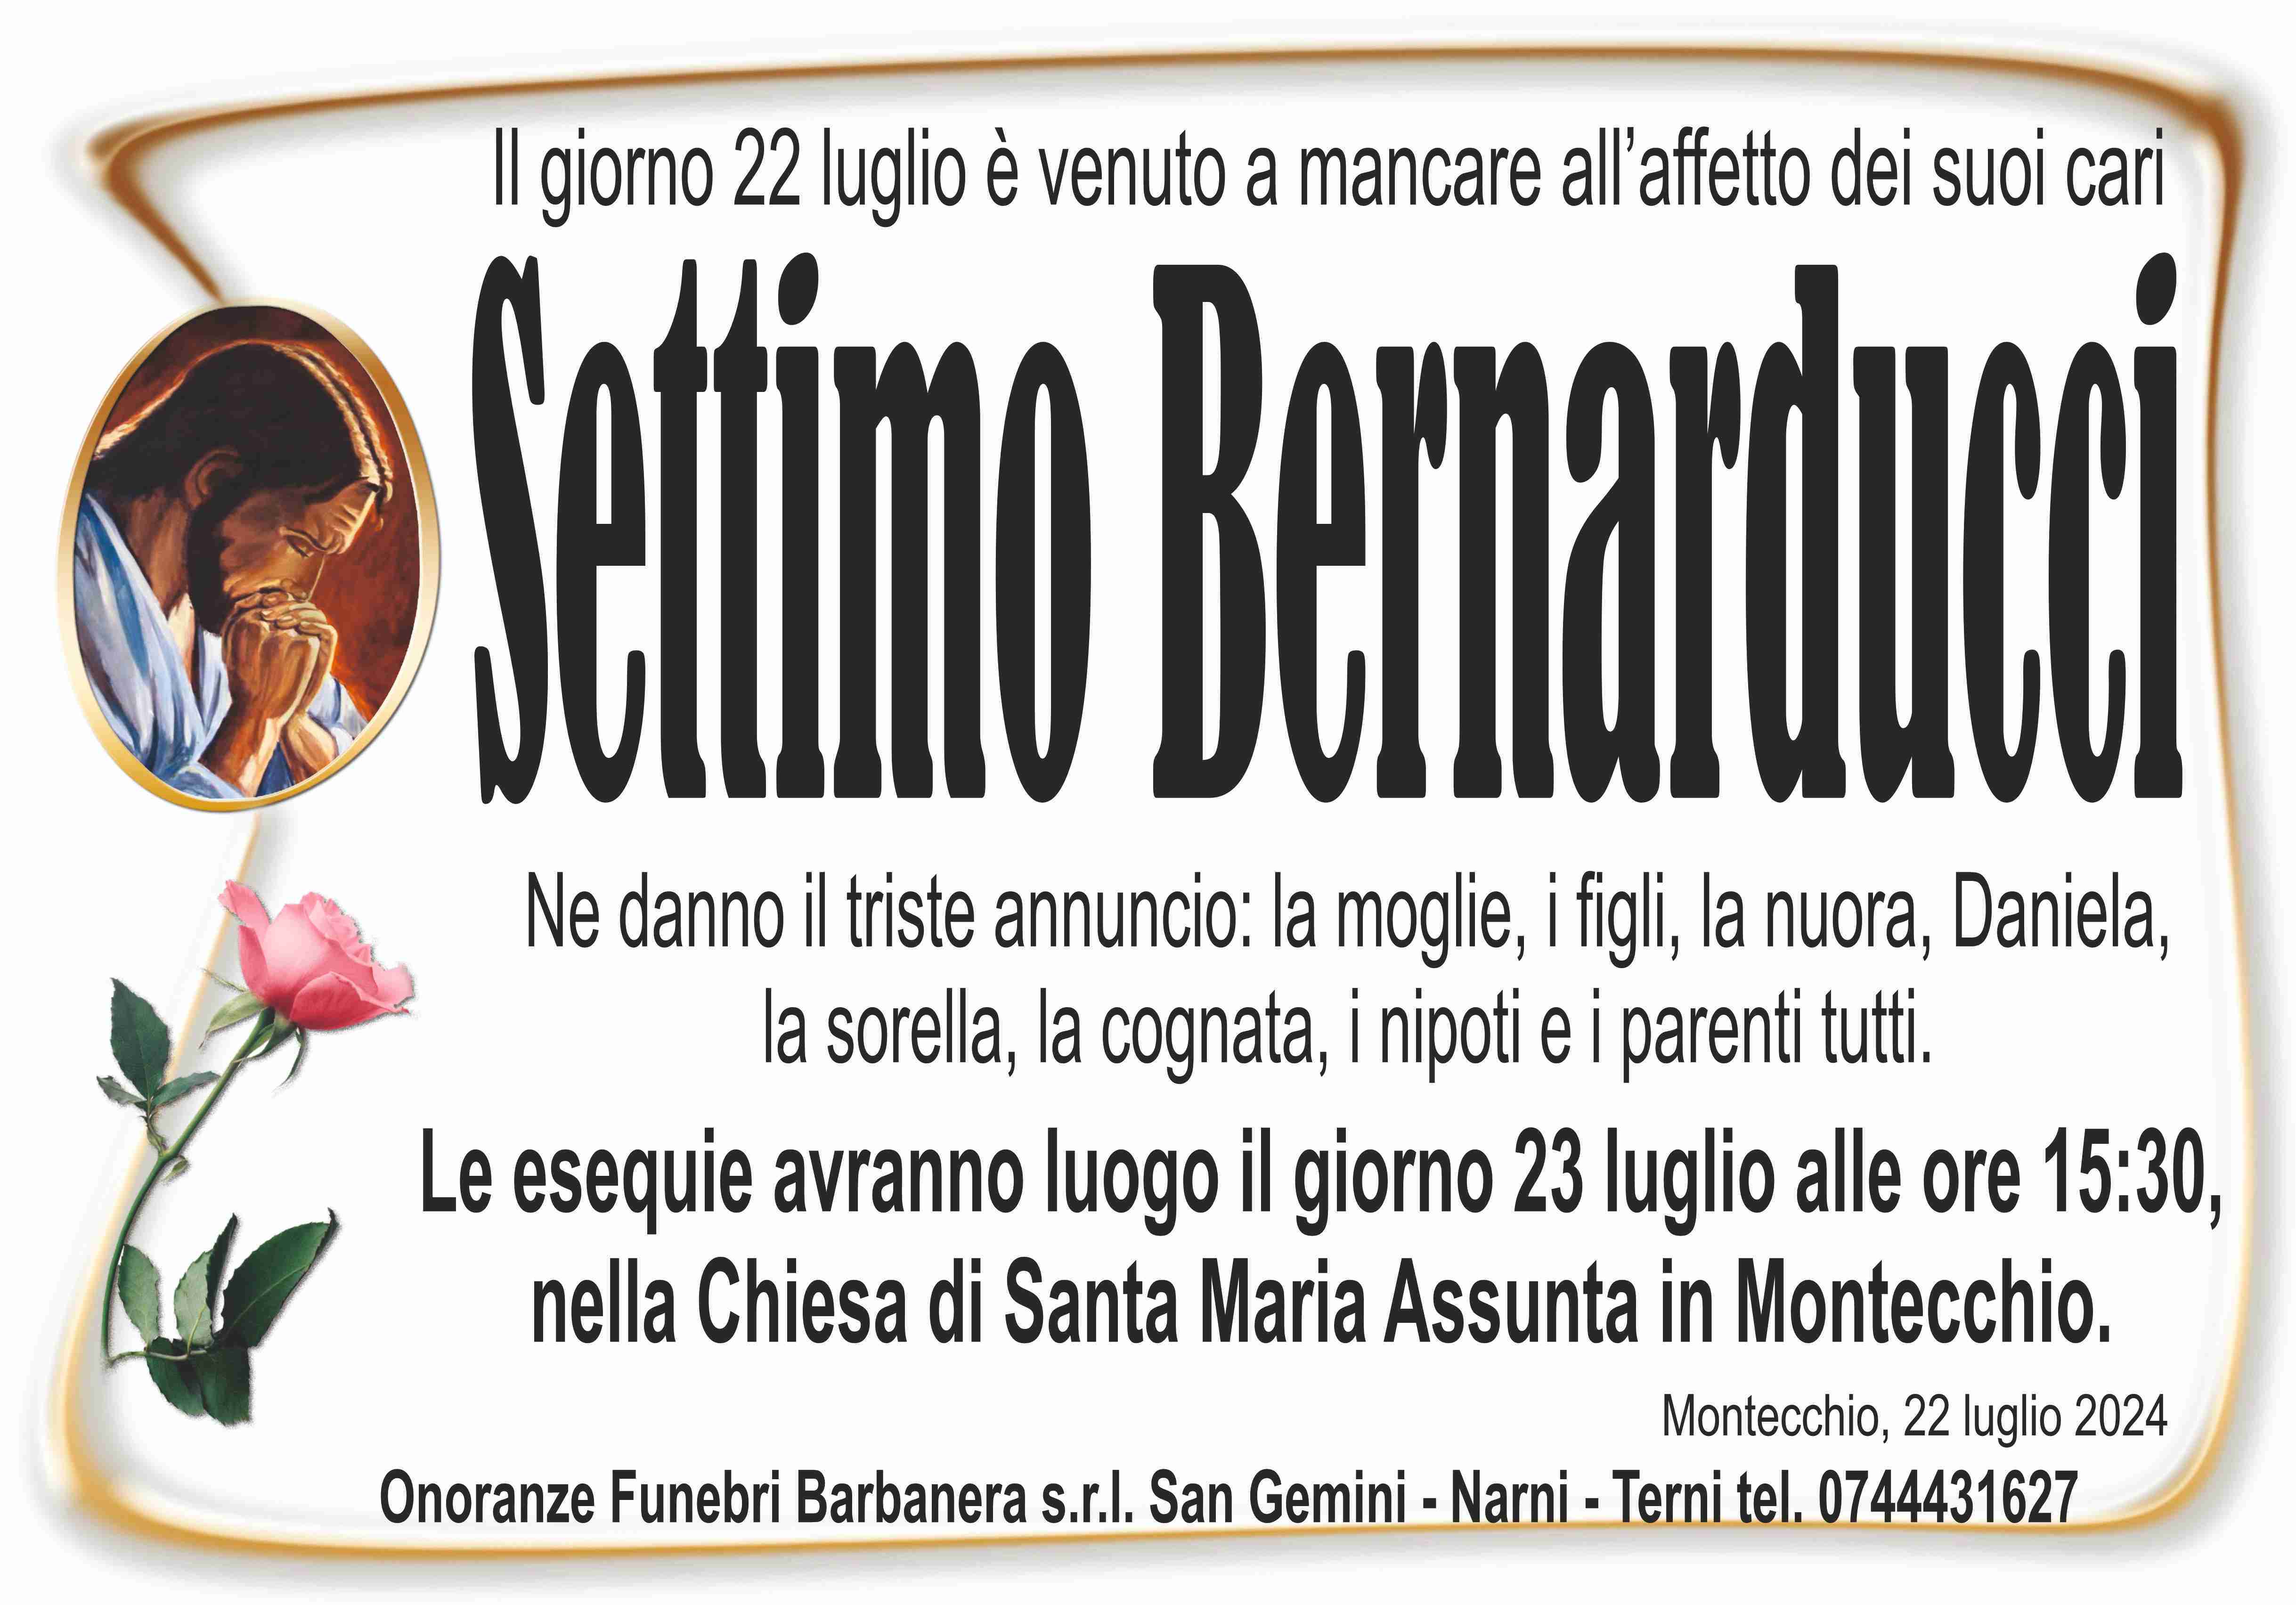 Settimo Bernarducci